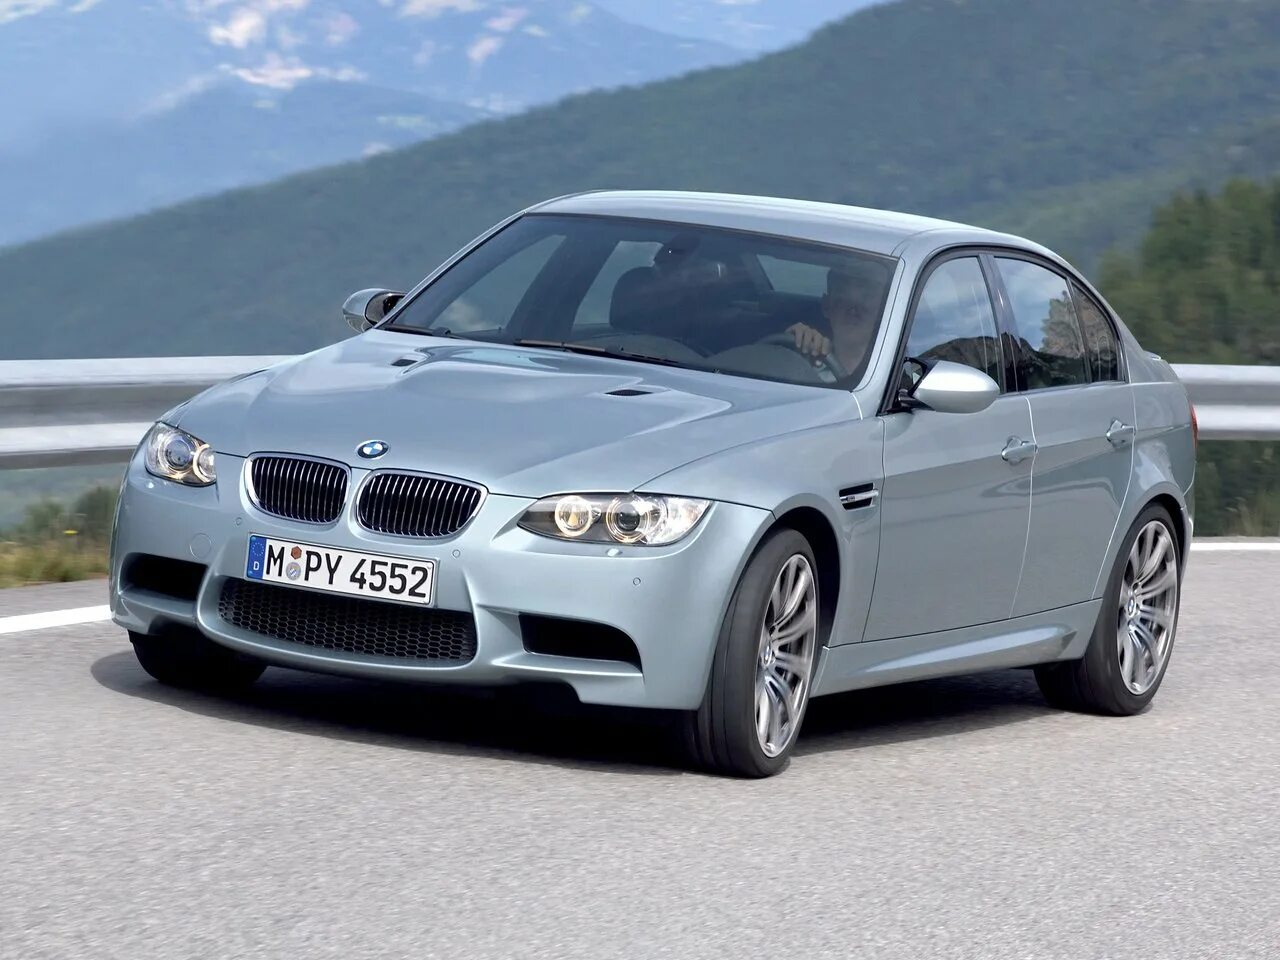 A 3 m 3 24 m 4. BMW m3 IV (e90). BMW m3 e90 sedan. BMW m3 IV e90 2008. BMW m3 e90 2007.